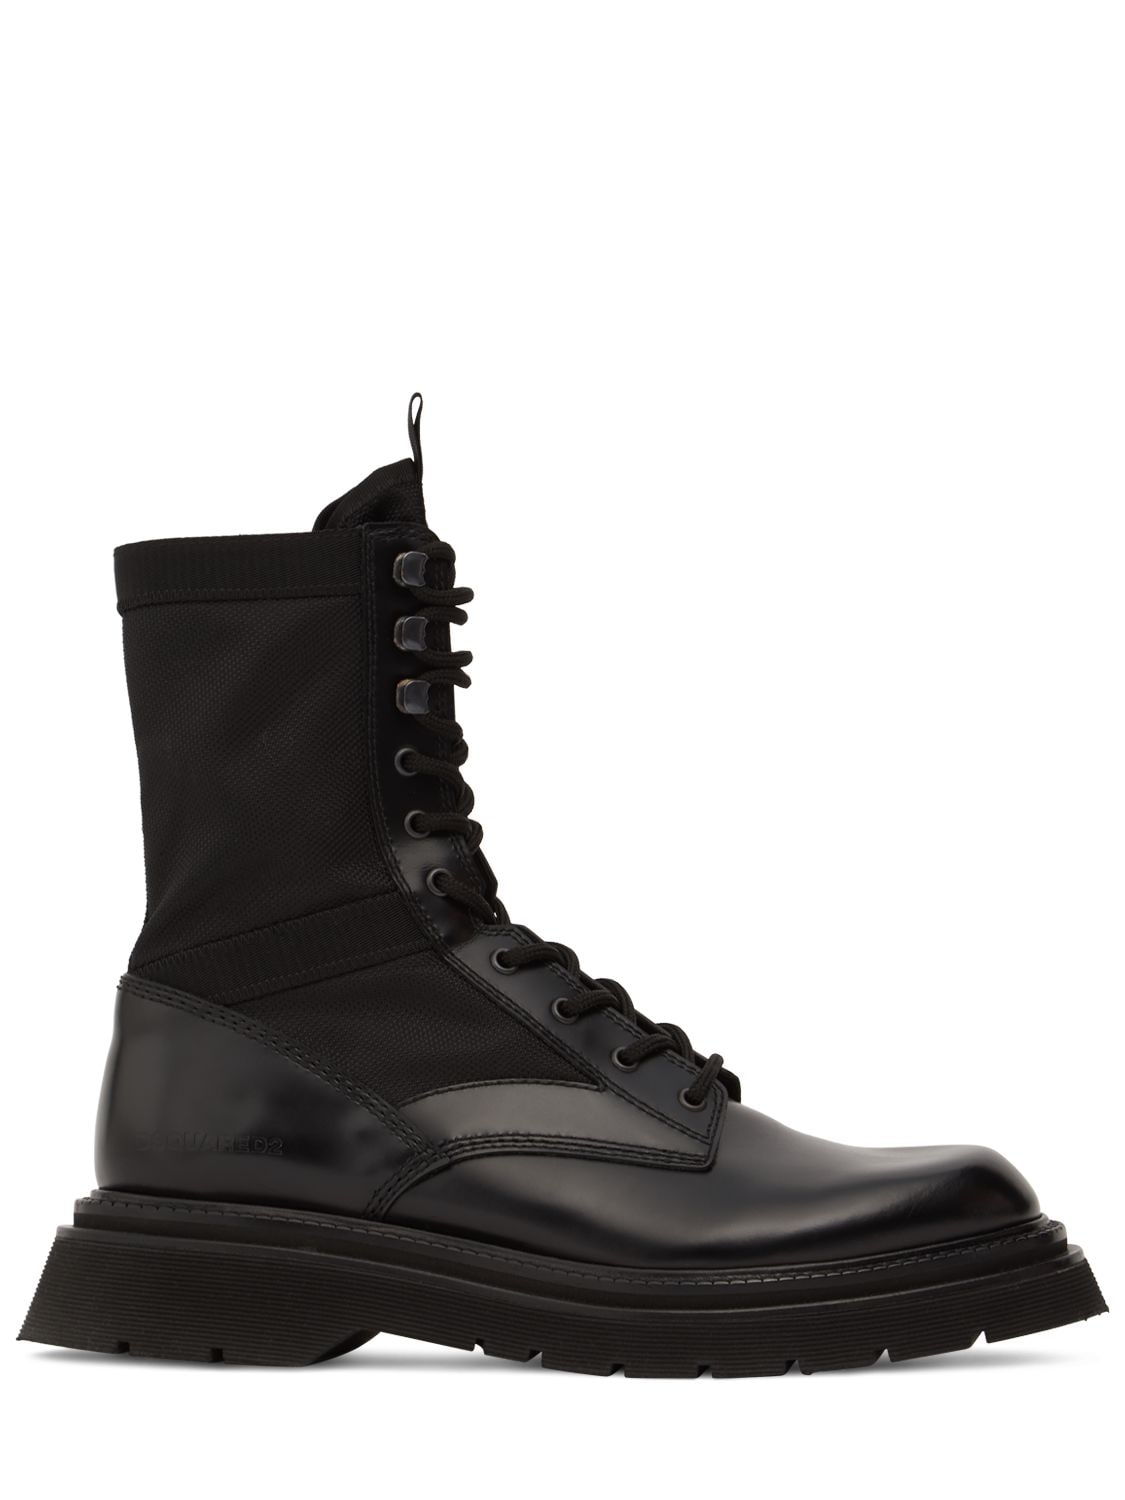 Urban Combat Boots